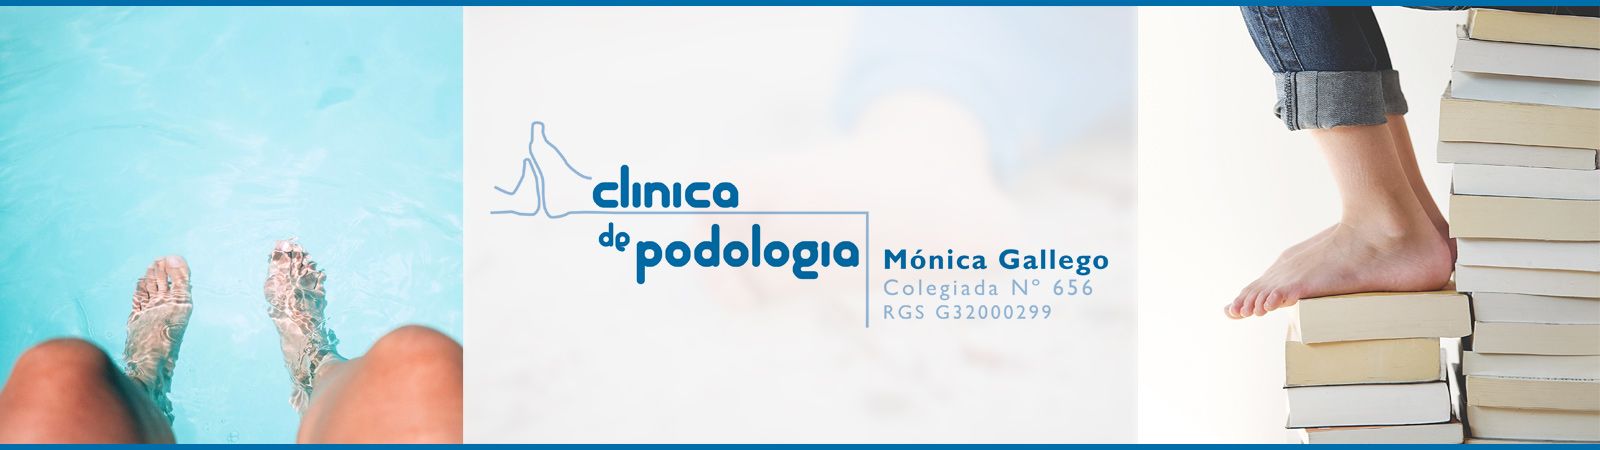 Podóloga Mónica Gallego Rodríguez banner 3